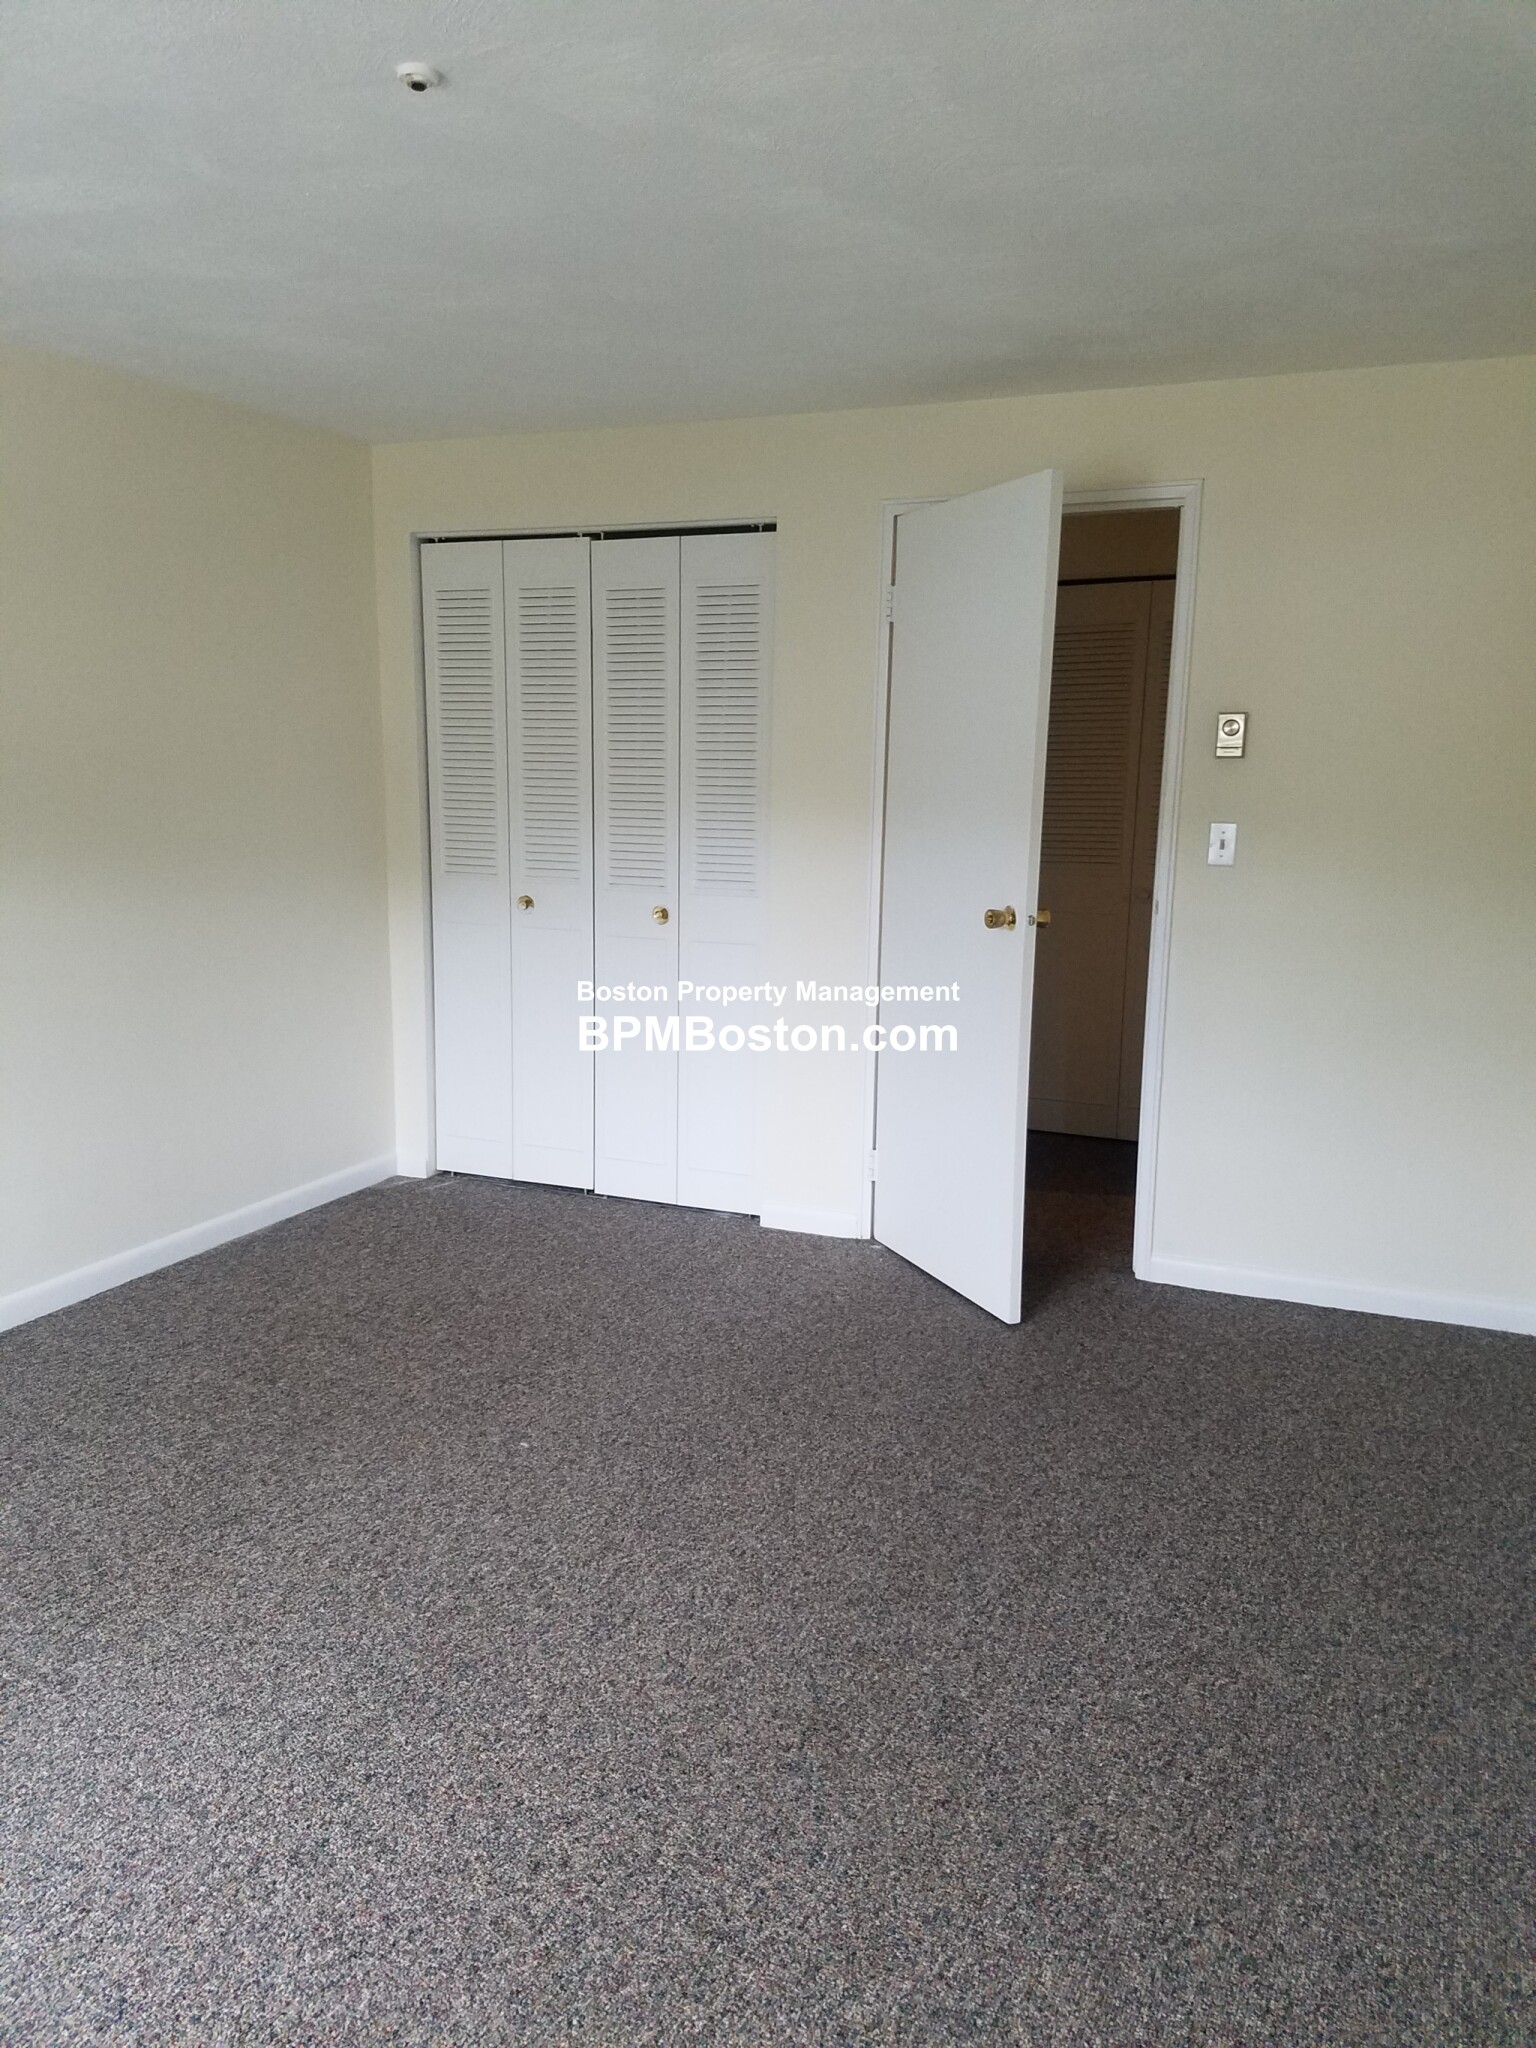 Photos of apartment on Elmwood Pk.,Quincy MA 02170